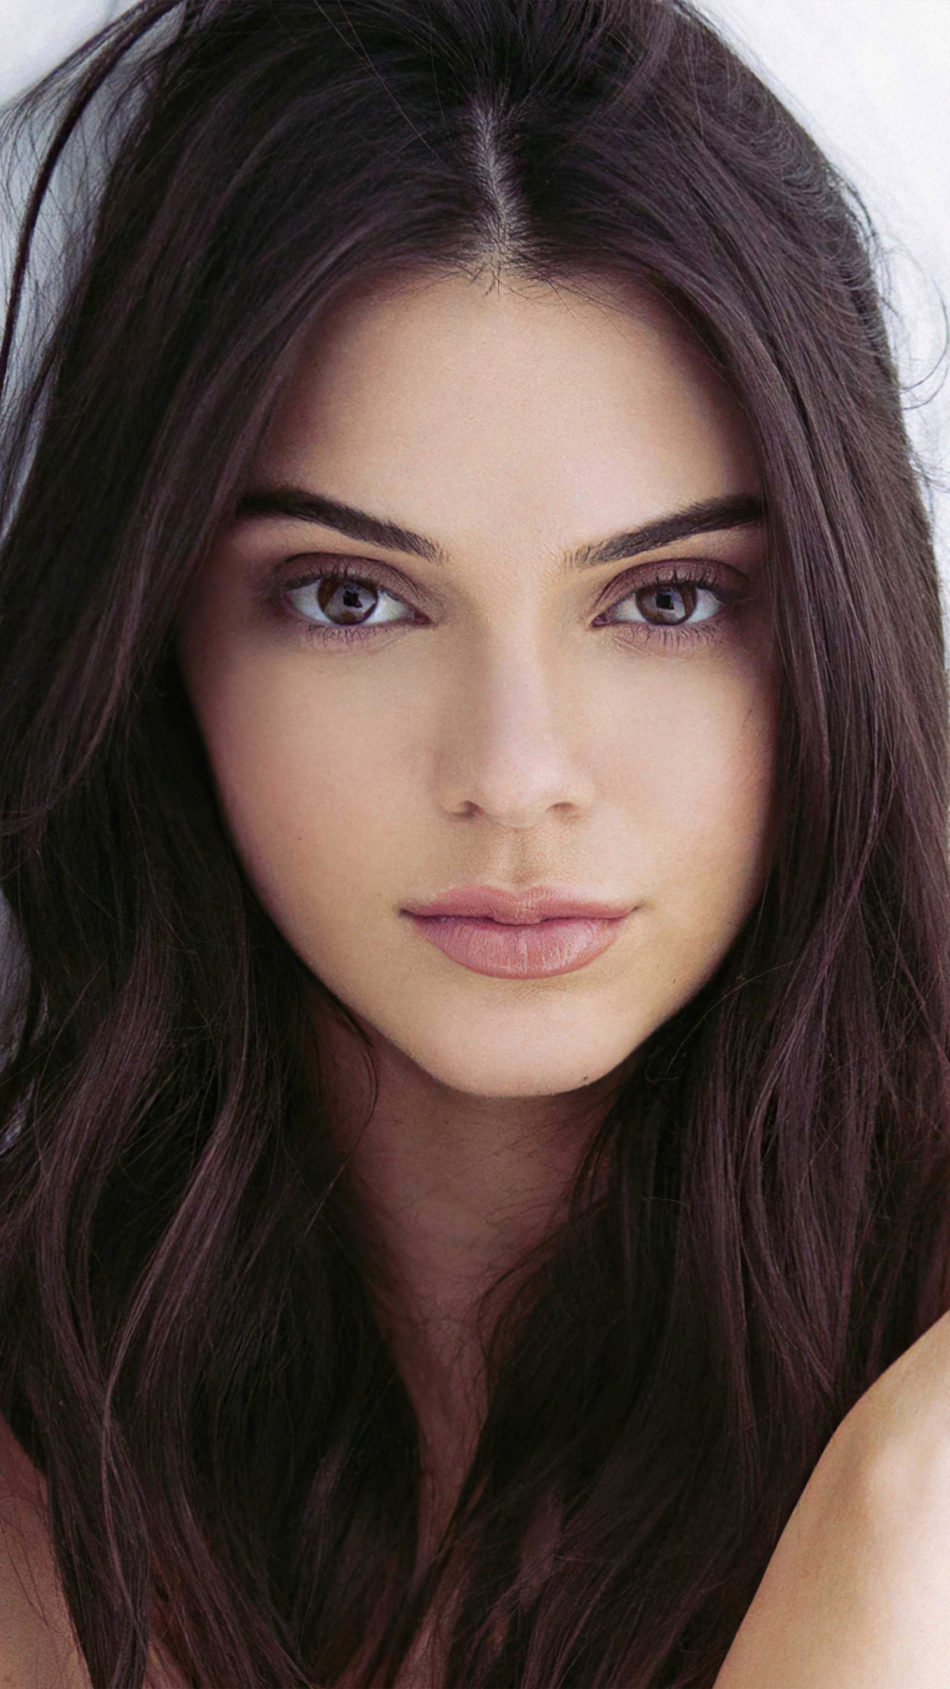 Cute Kendall Jenner 2020 4K Ultra HD Mobile Wallpaper